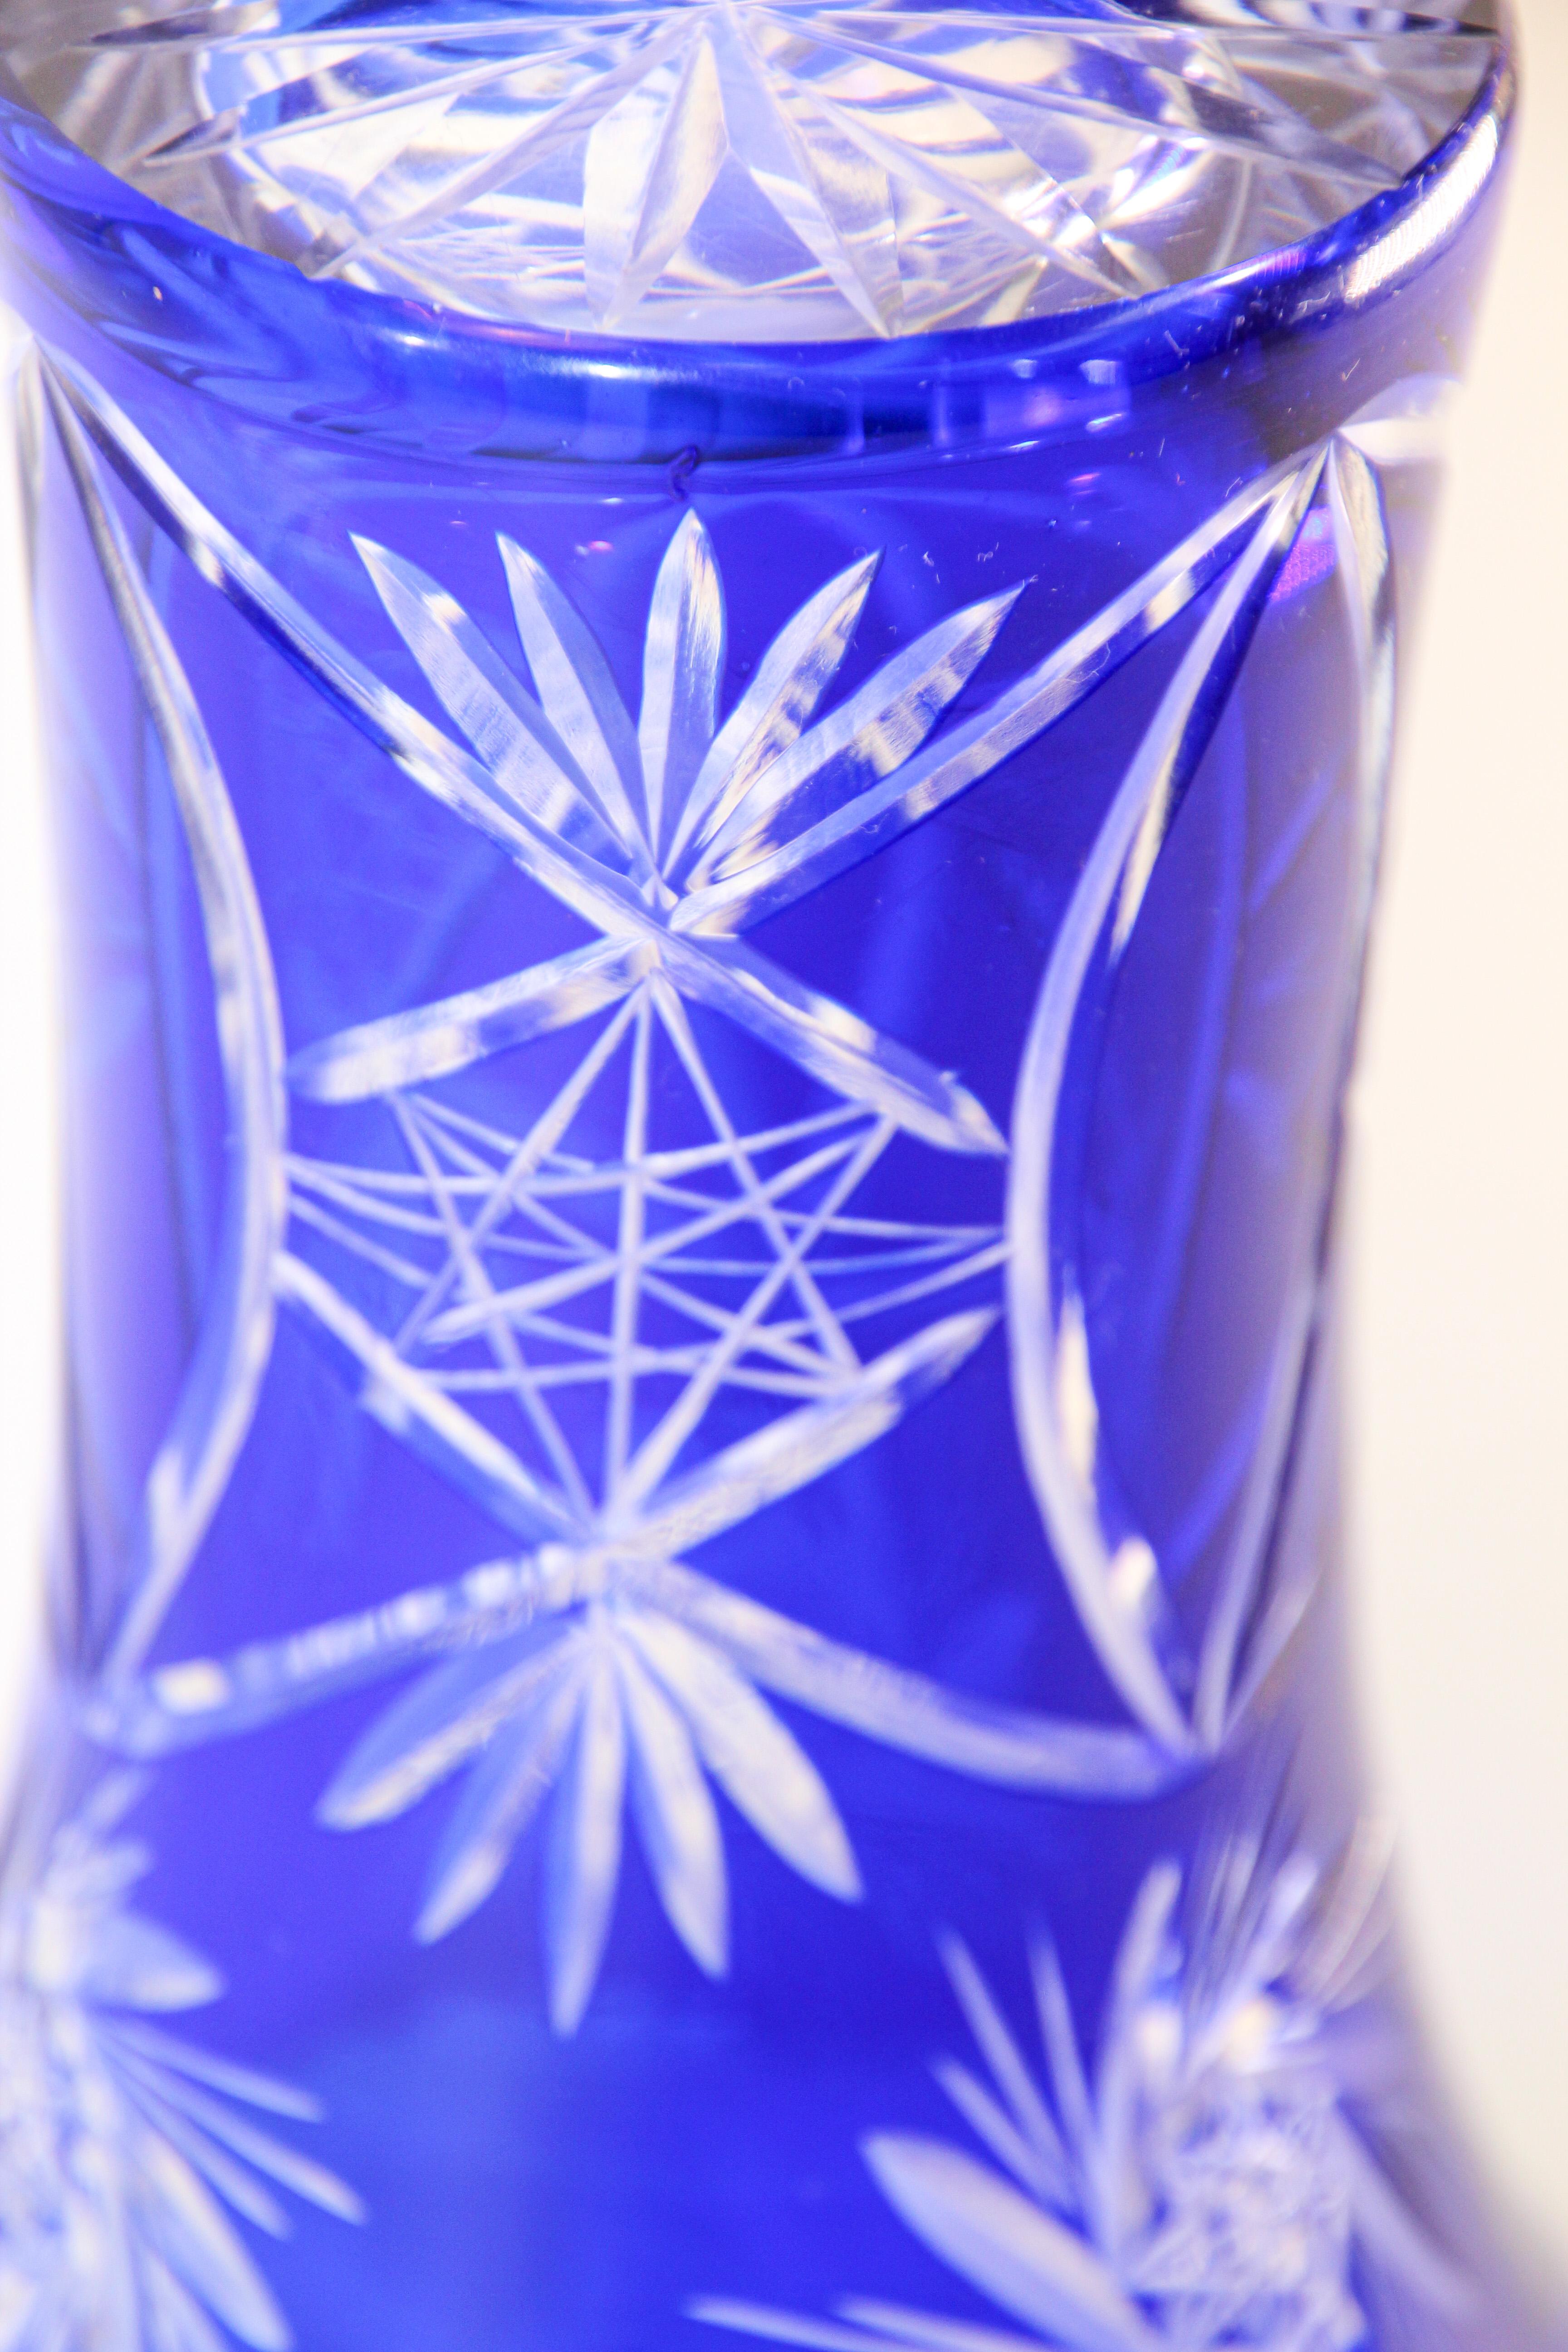 Vintage Bohemian Cobalt Blue Cut to Clear Glass Crystal Vase 9